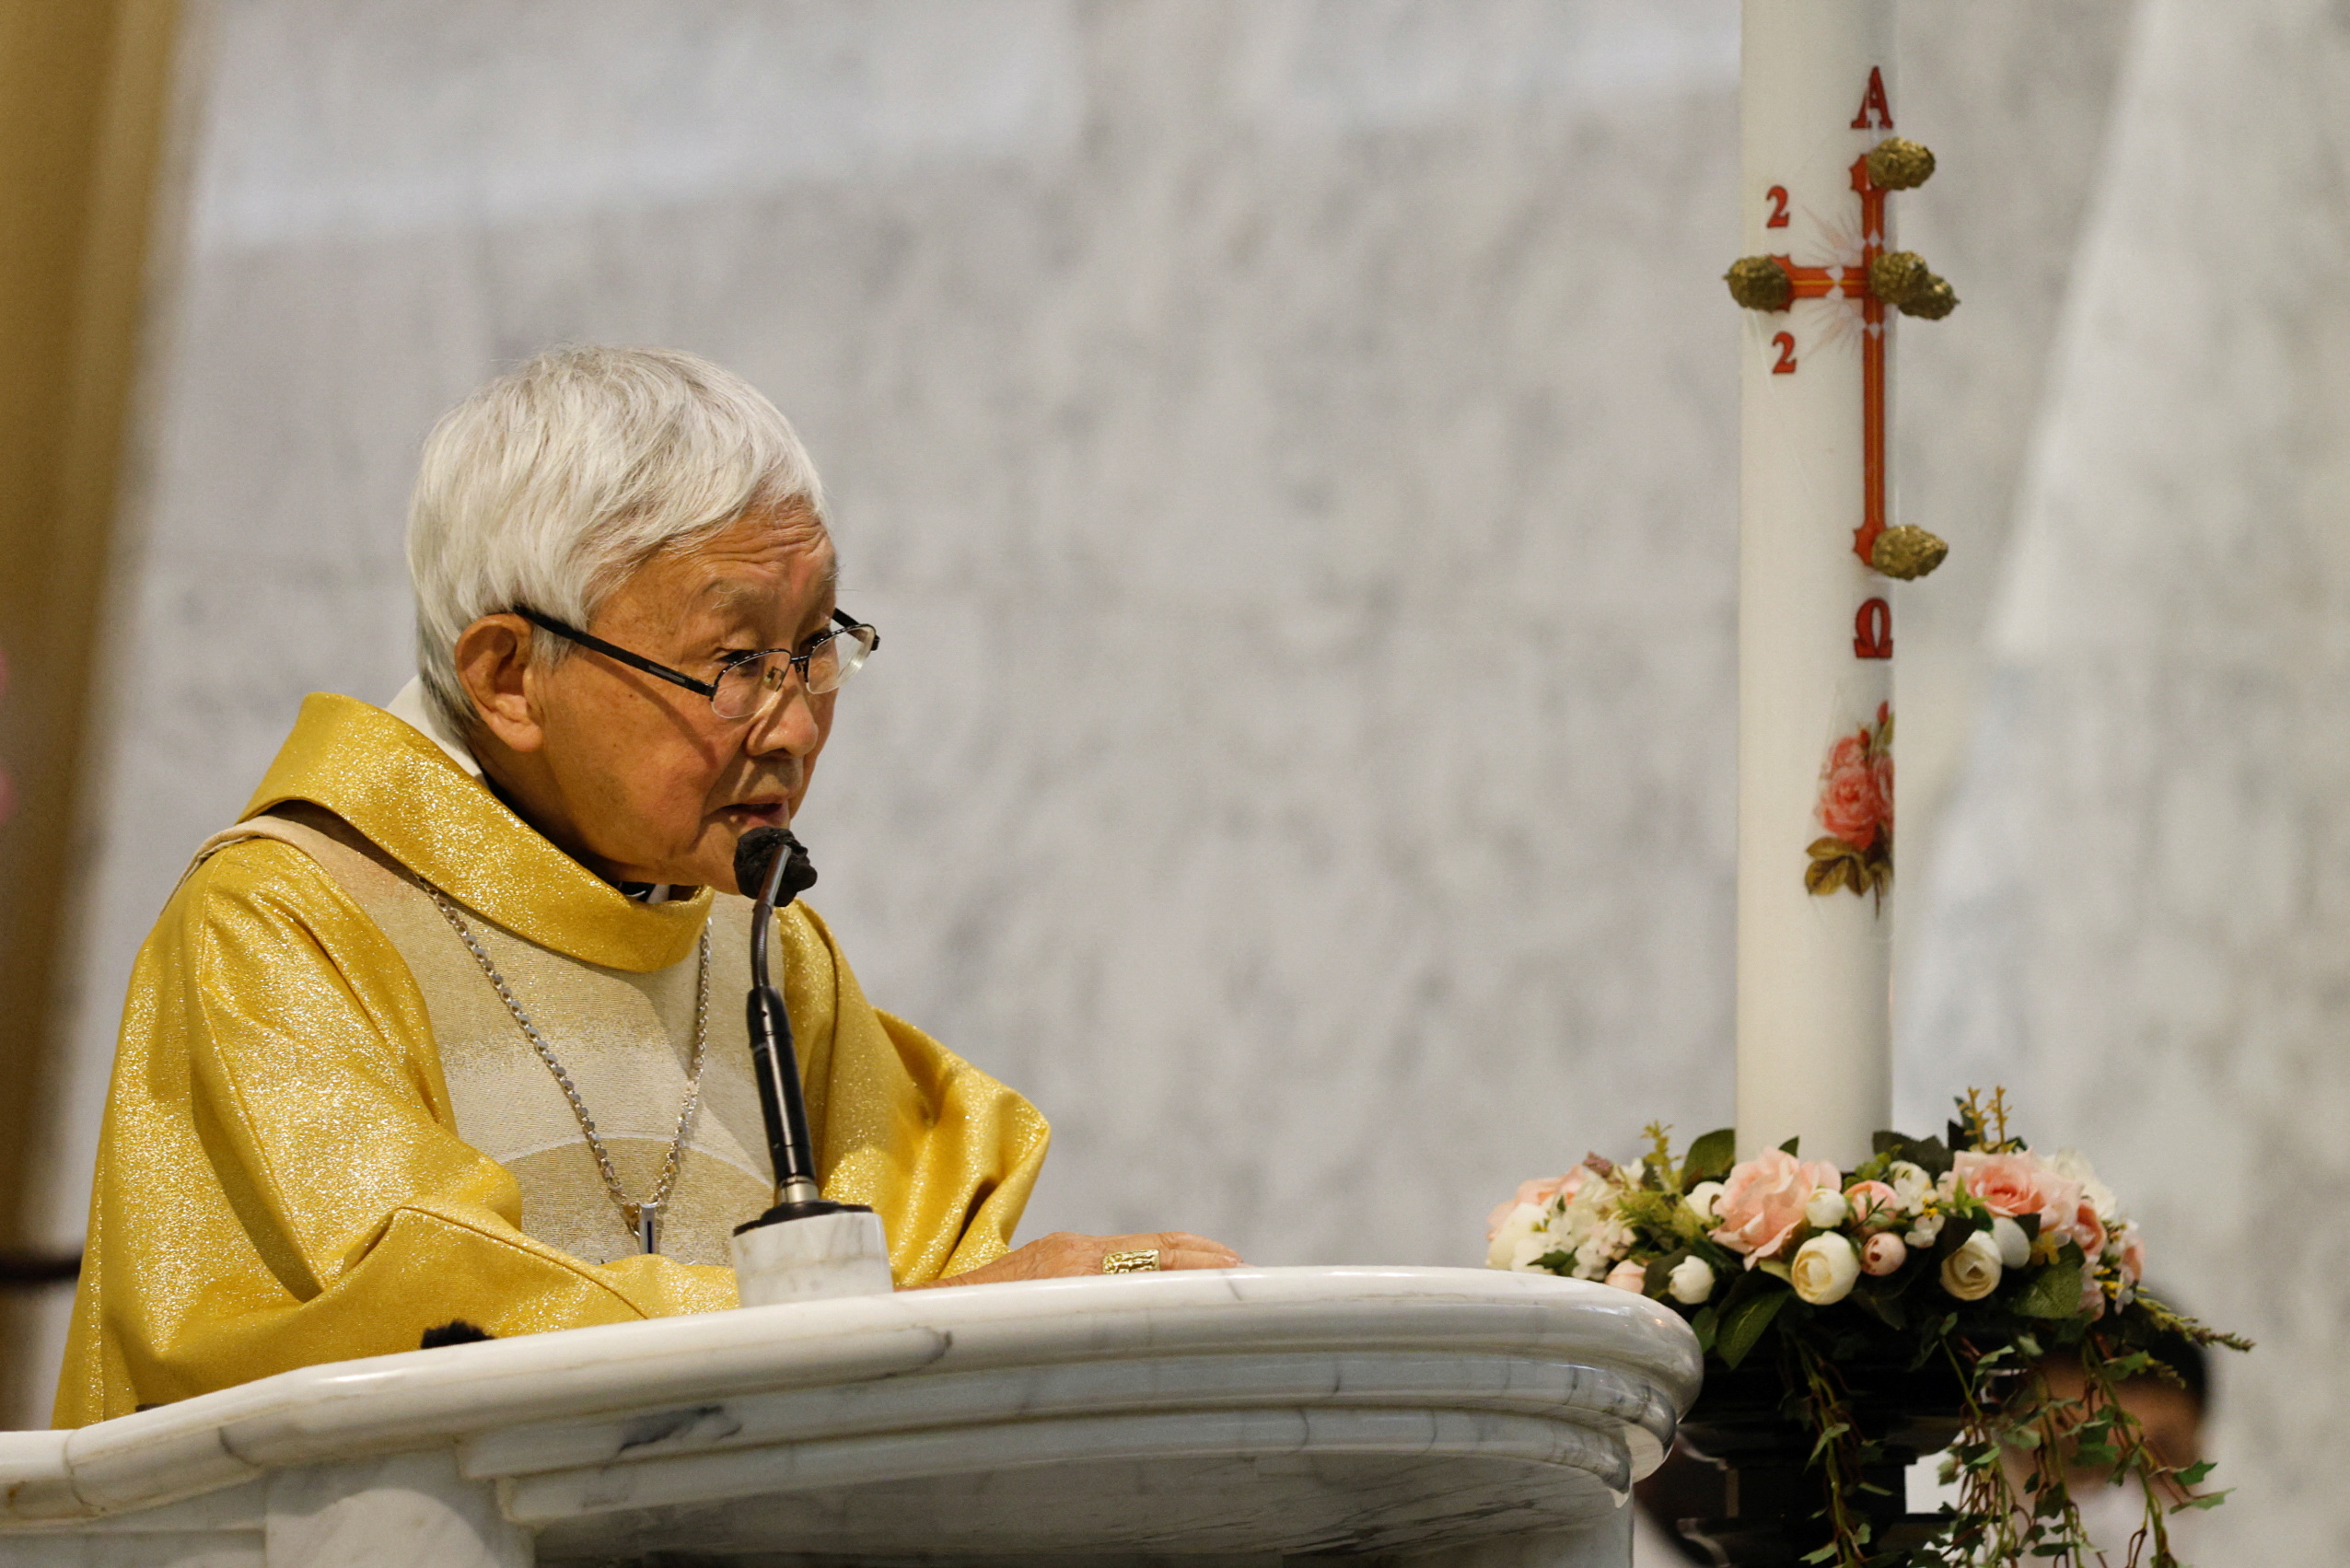 El cardenal Joseph Zen celebra una misa en Hong Kong, China, el 24 de mayo de 2022 (REUTERS/Tyrone Siu)